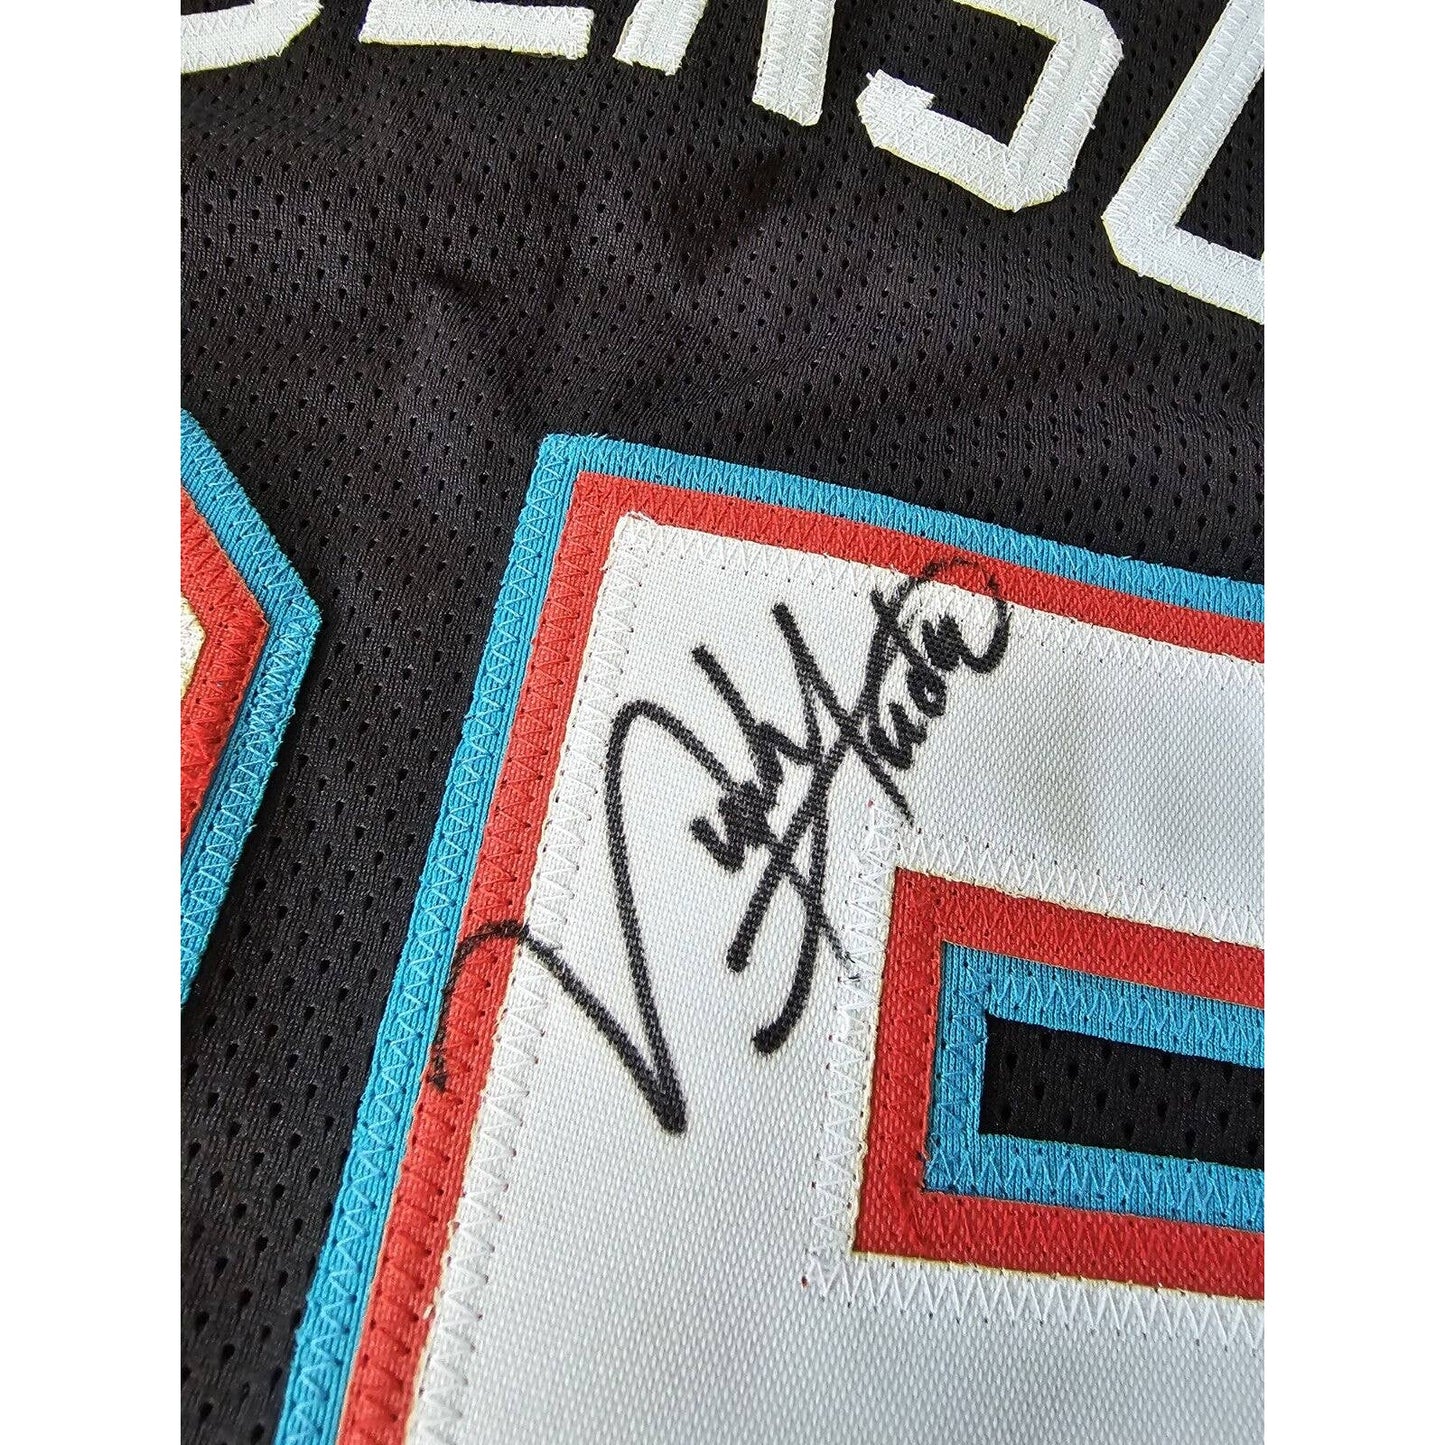 Nick Anderson Autographed/Signed Jersey JSA COA Memphis Grizzlies